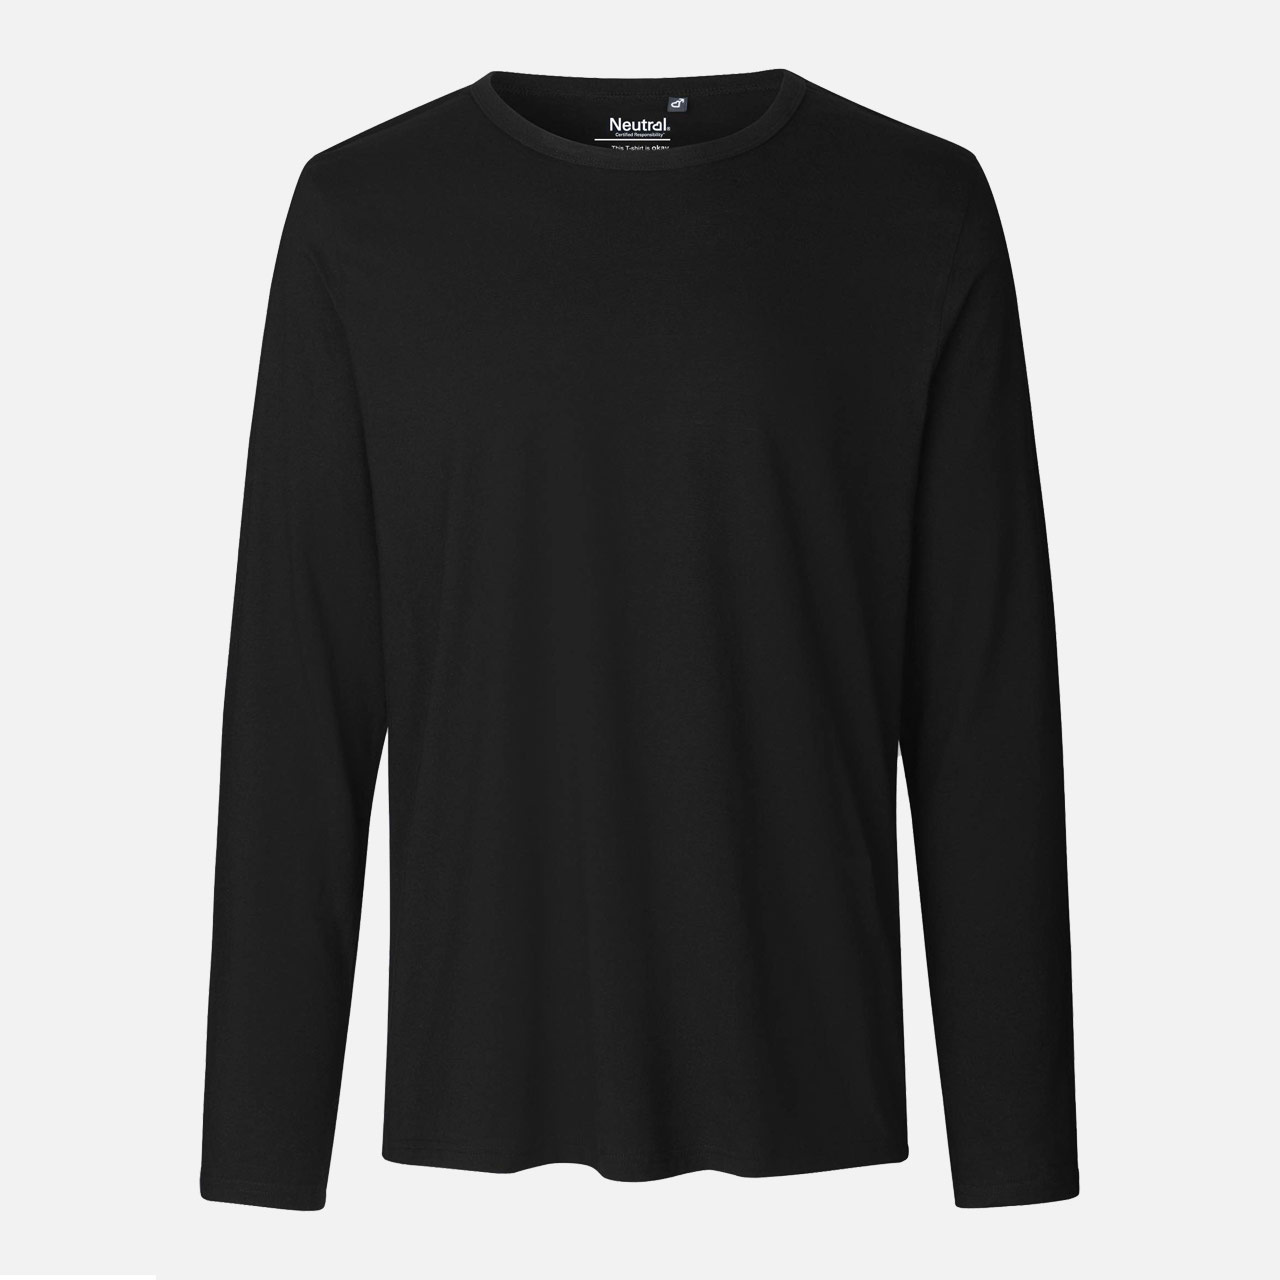 Bekleidung, Langarm, Ärmel, T-shirt, Pullover